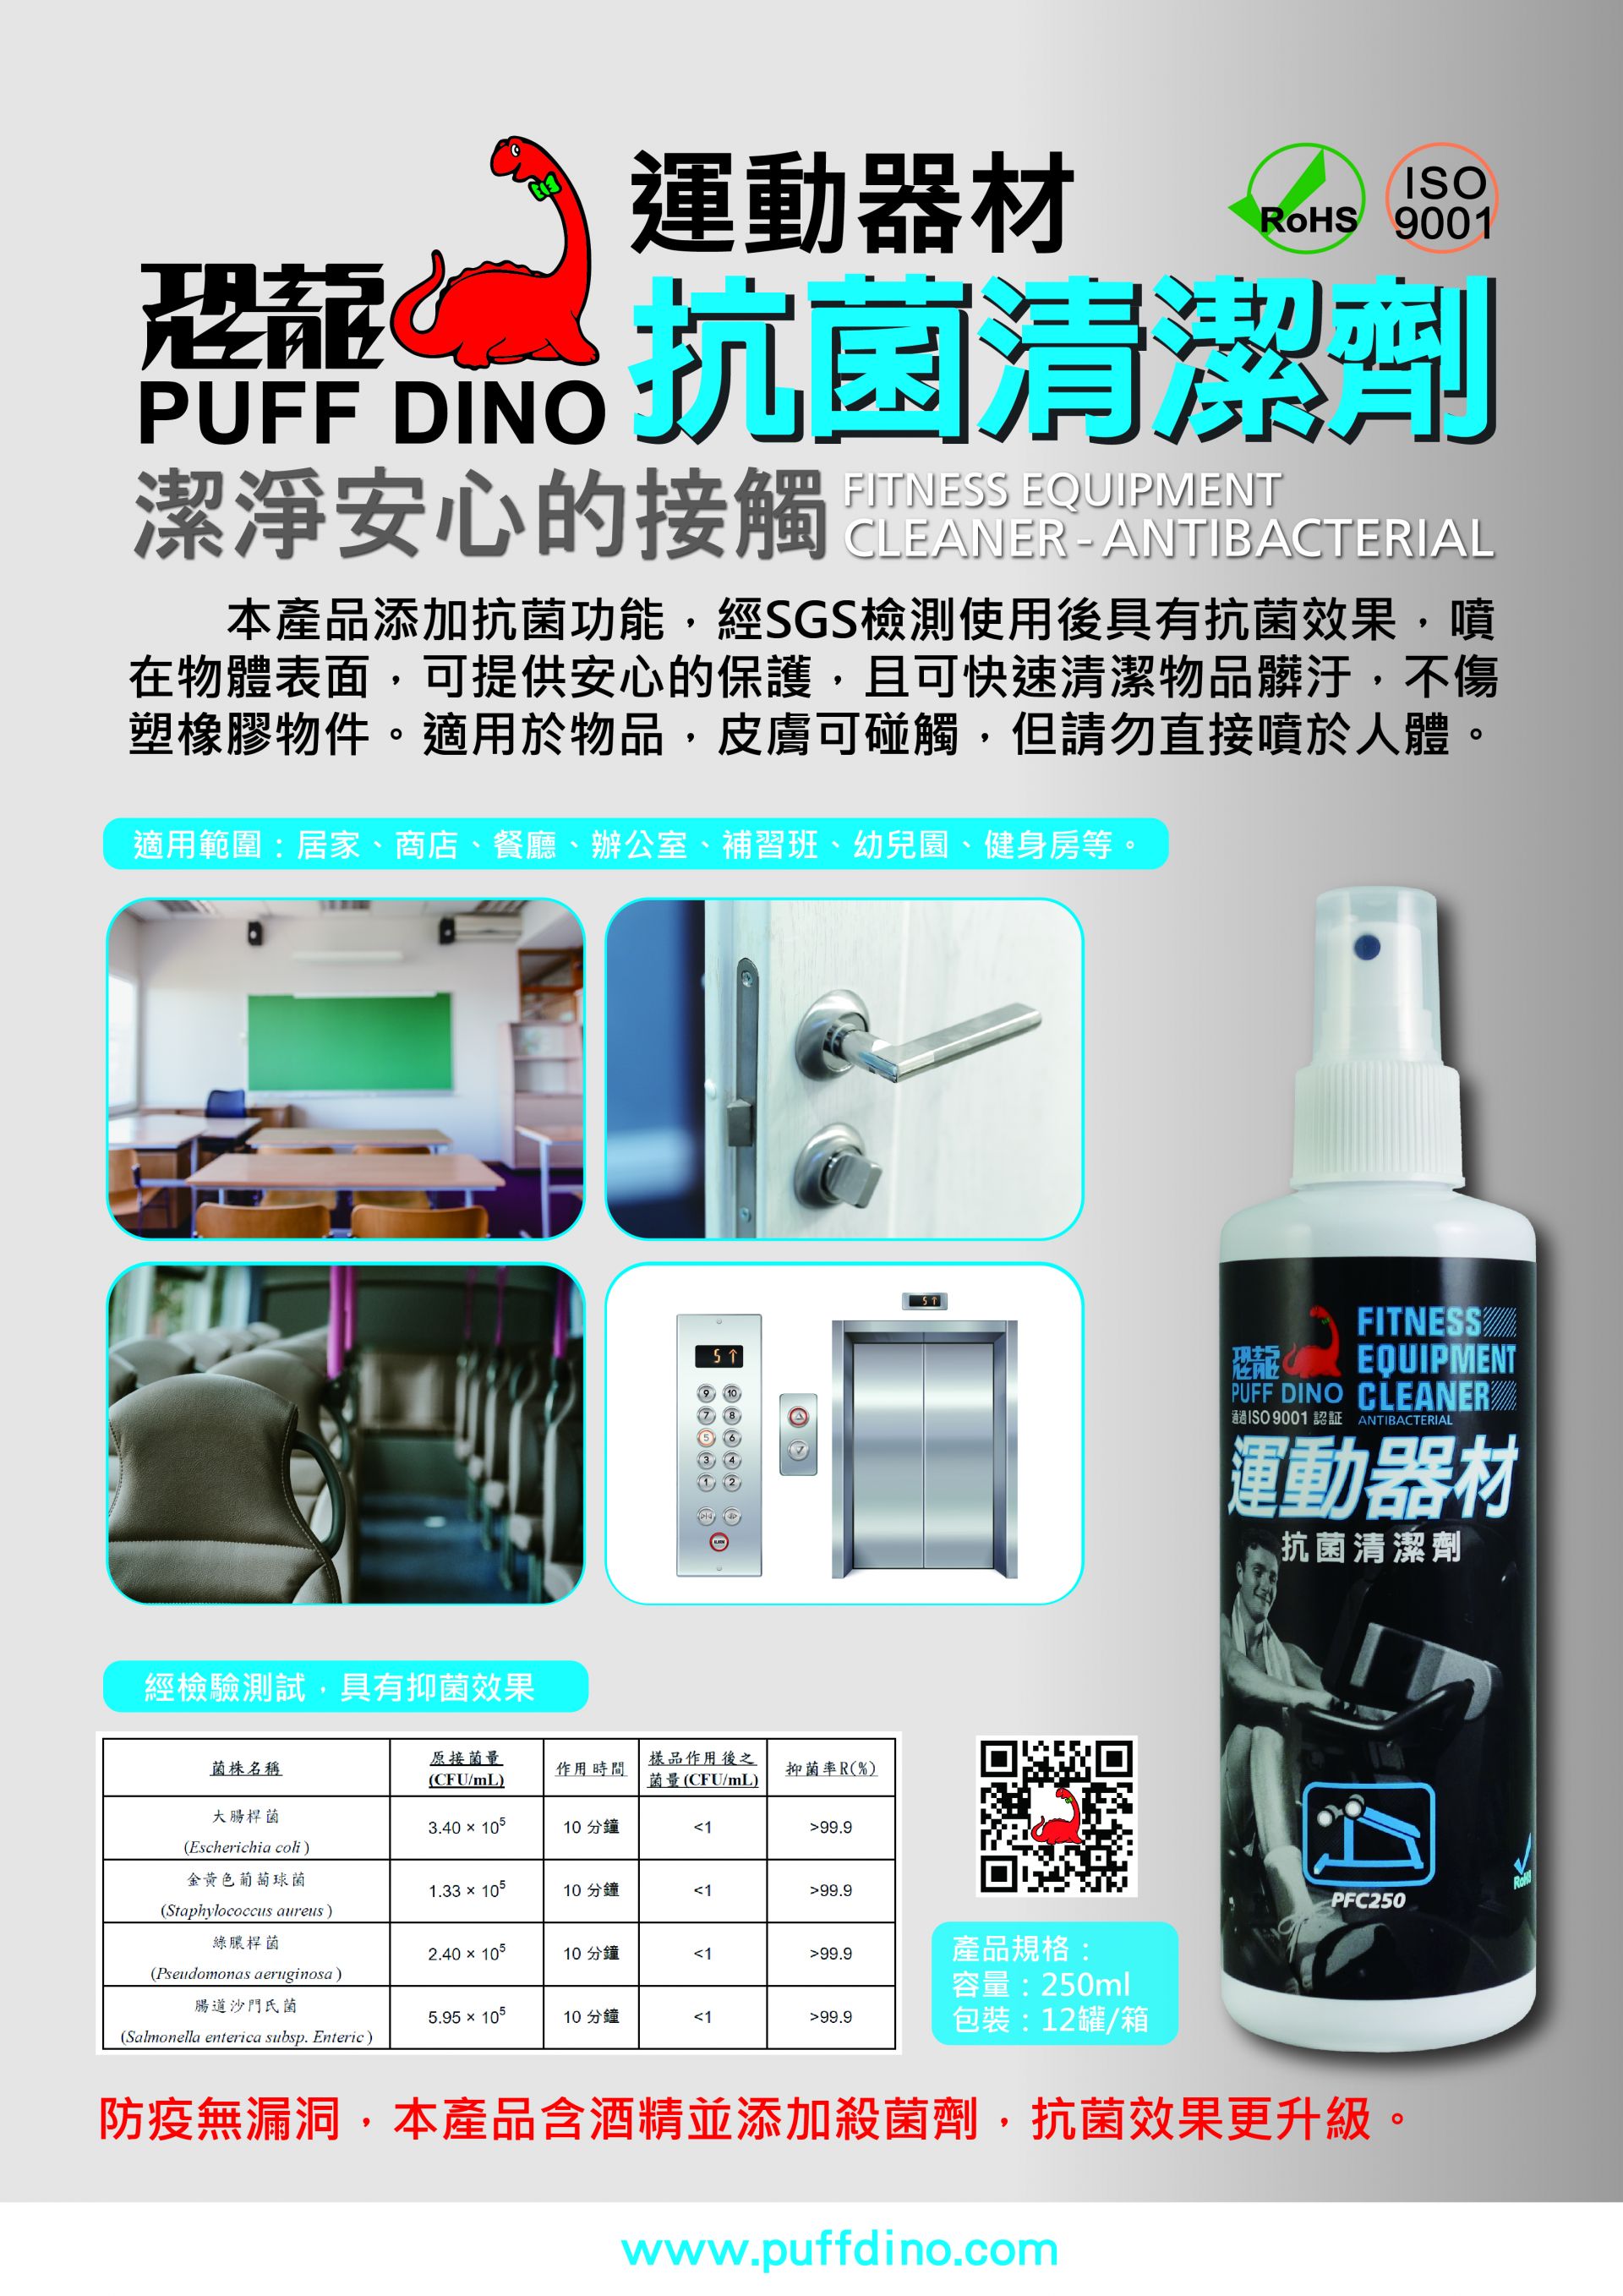 PUFF DINO Fitness Equipment Cleaner-DM